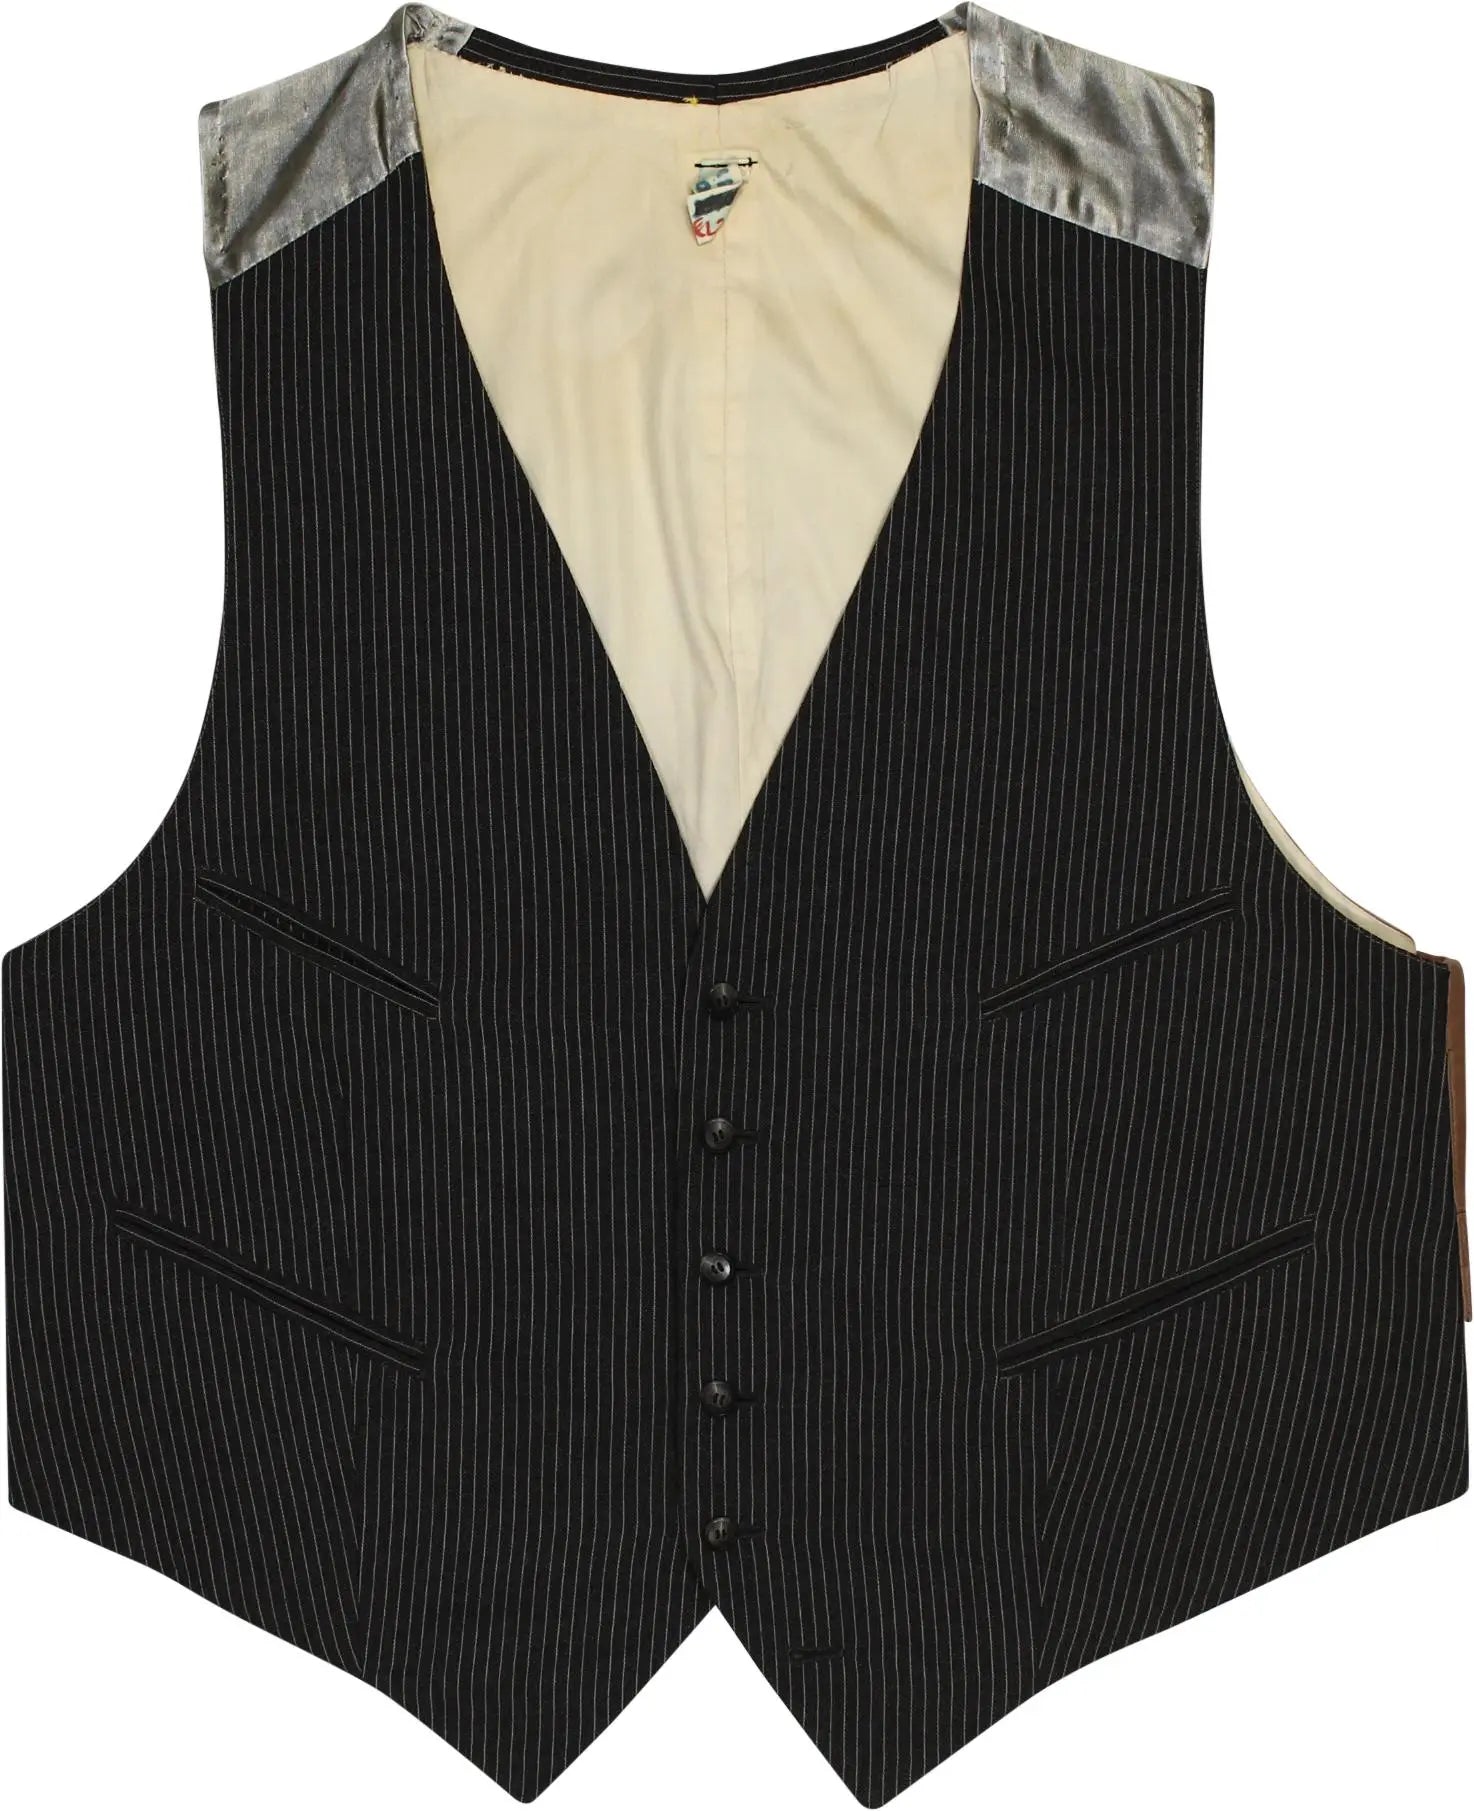 Handmade - Handmade Striped Waistcoat- ThriftTale.com - Vintage and second handclothing